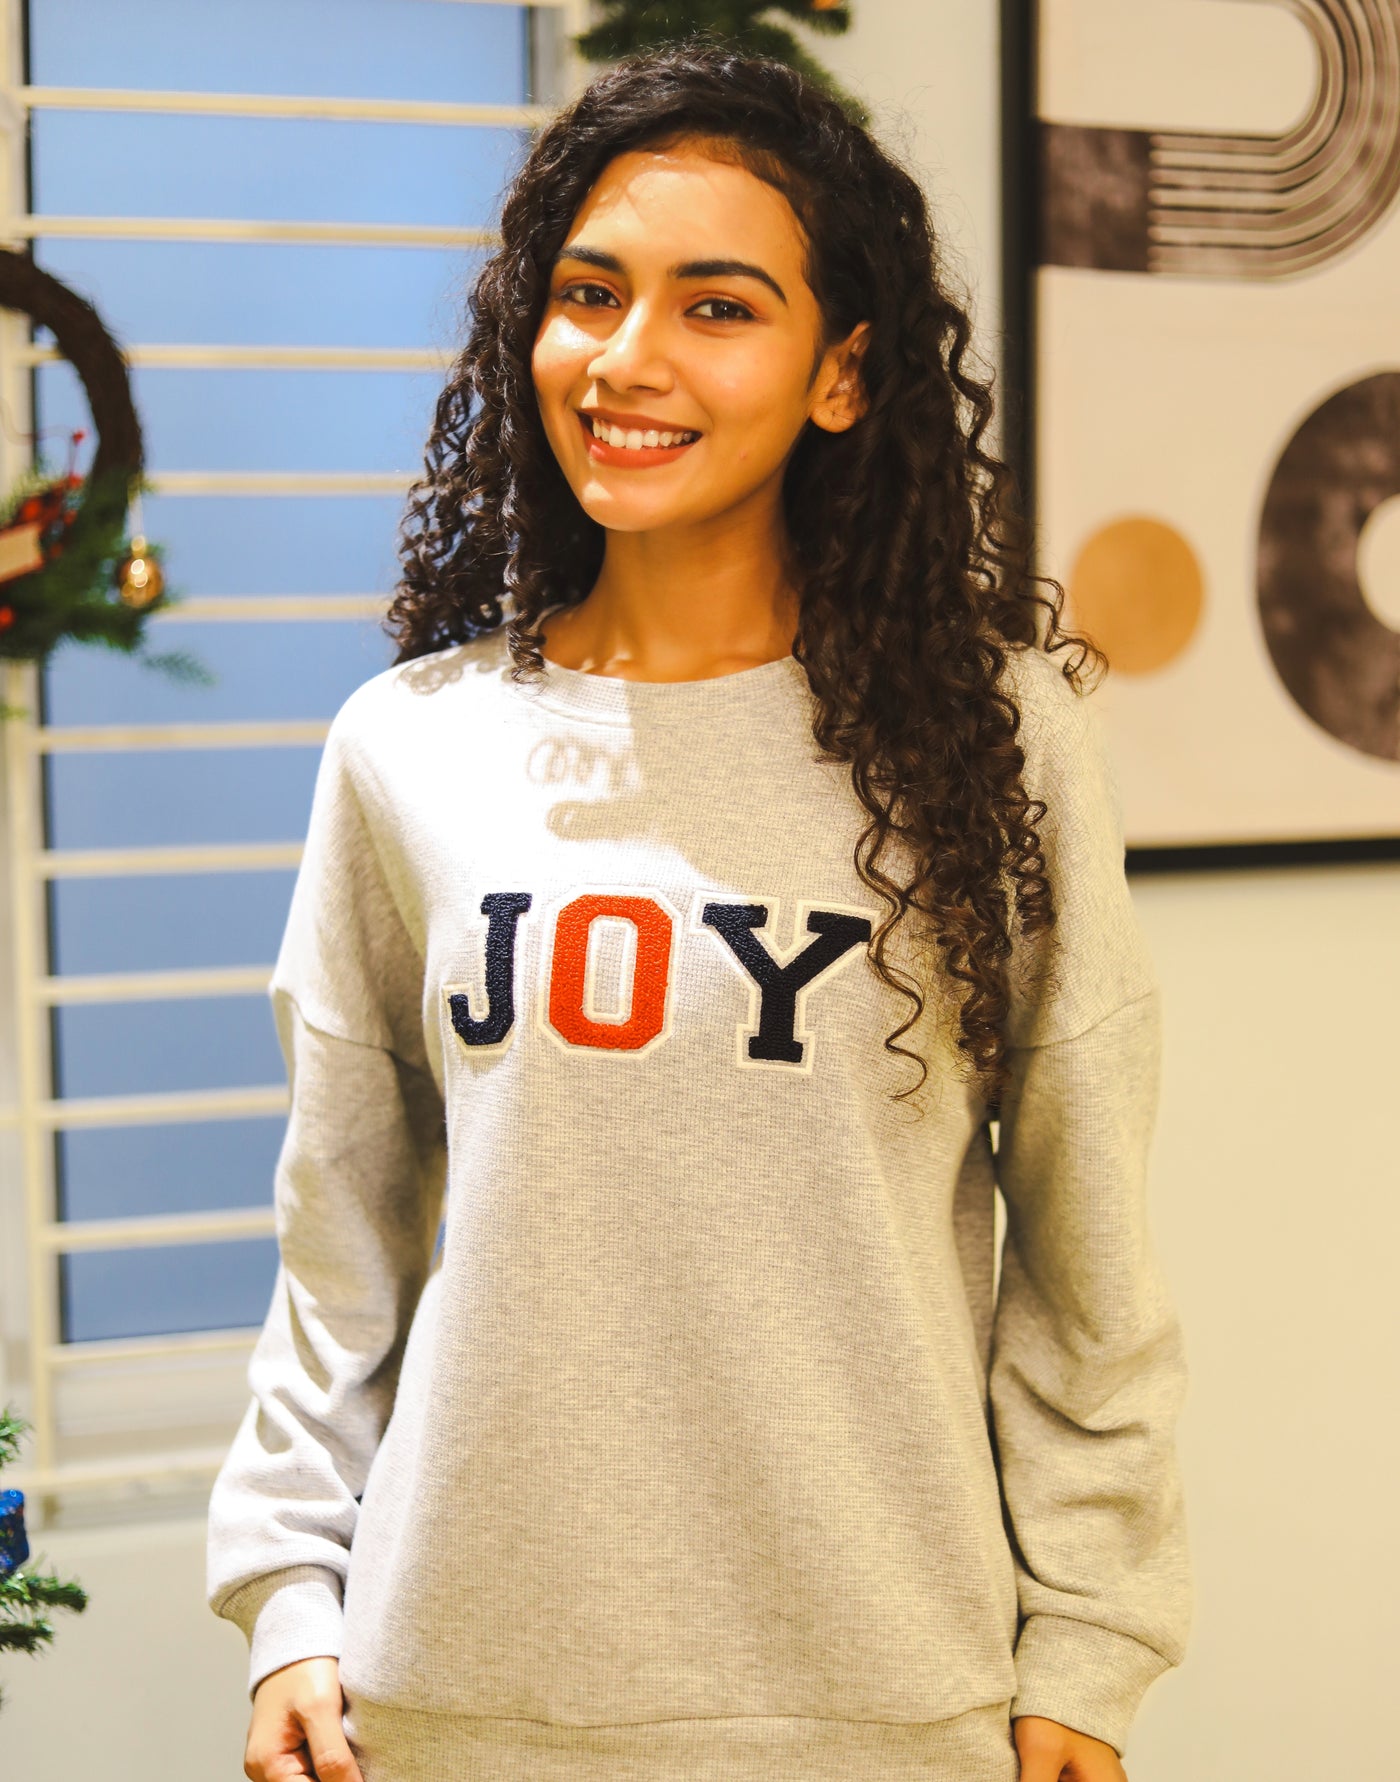 Sweatshirt for Women - Joy